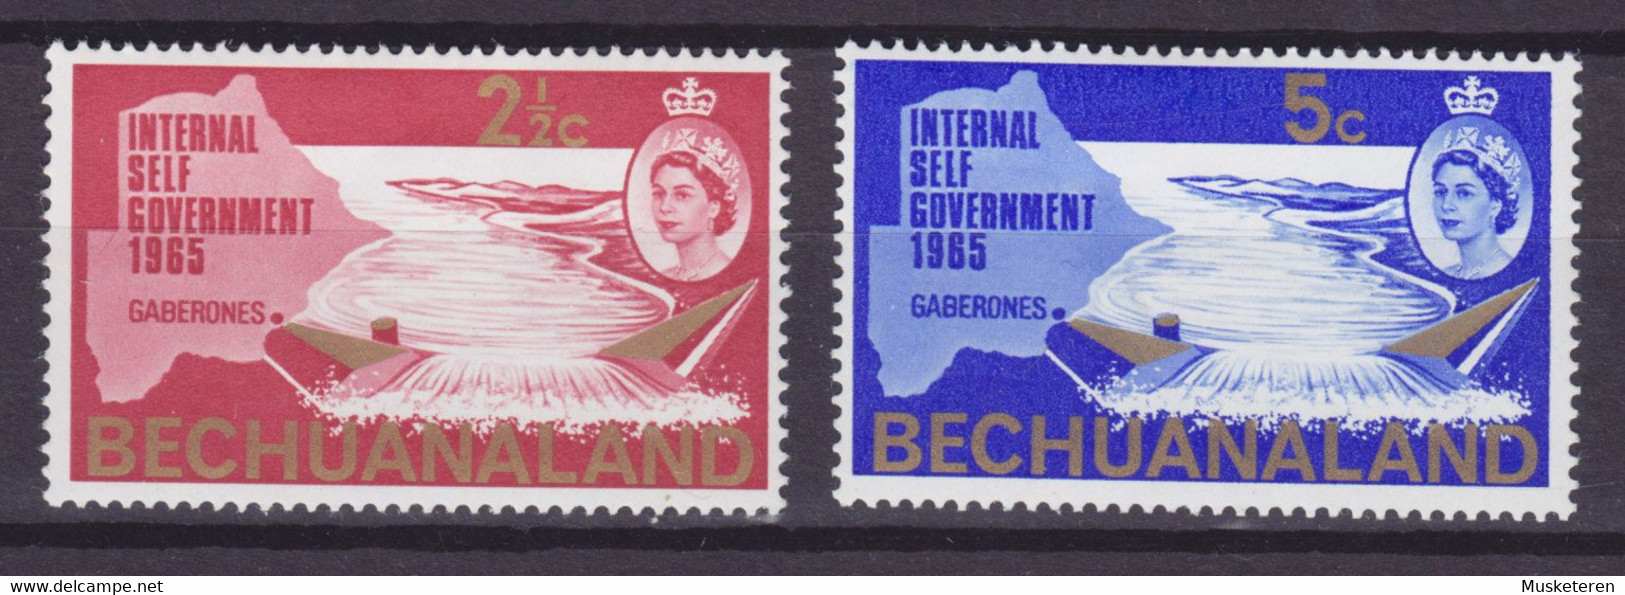 Bechuanaland 1965 Mi. 173-74    2c. & 5c. Self Government Landkarte Notwani River, MH** - 1965-1966 Interne Autonomie